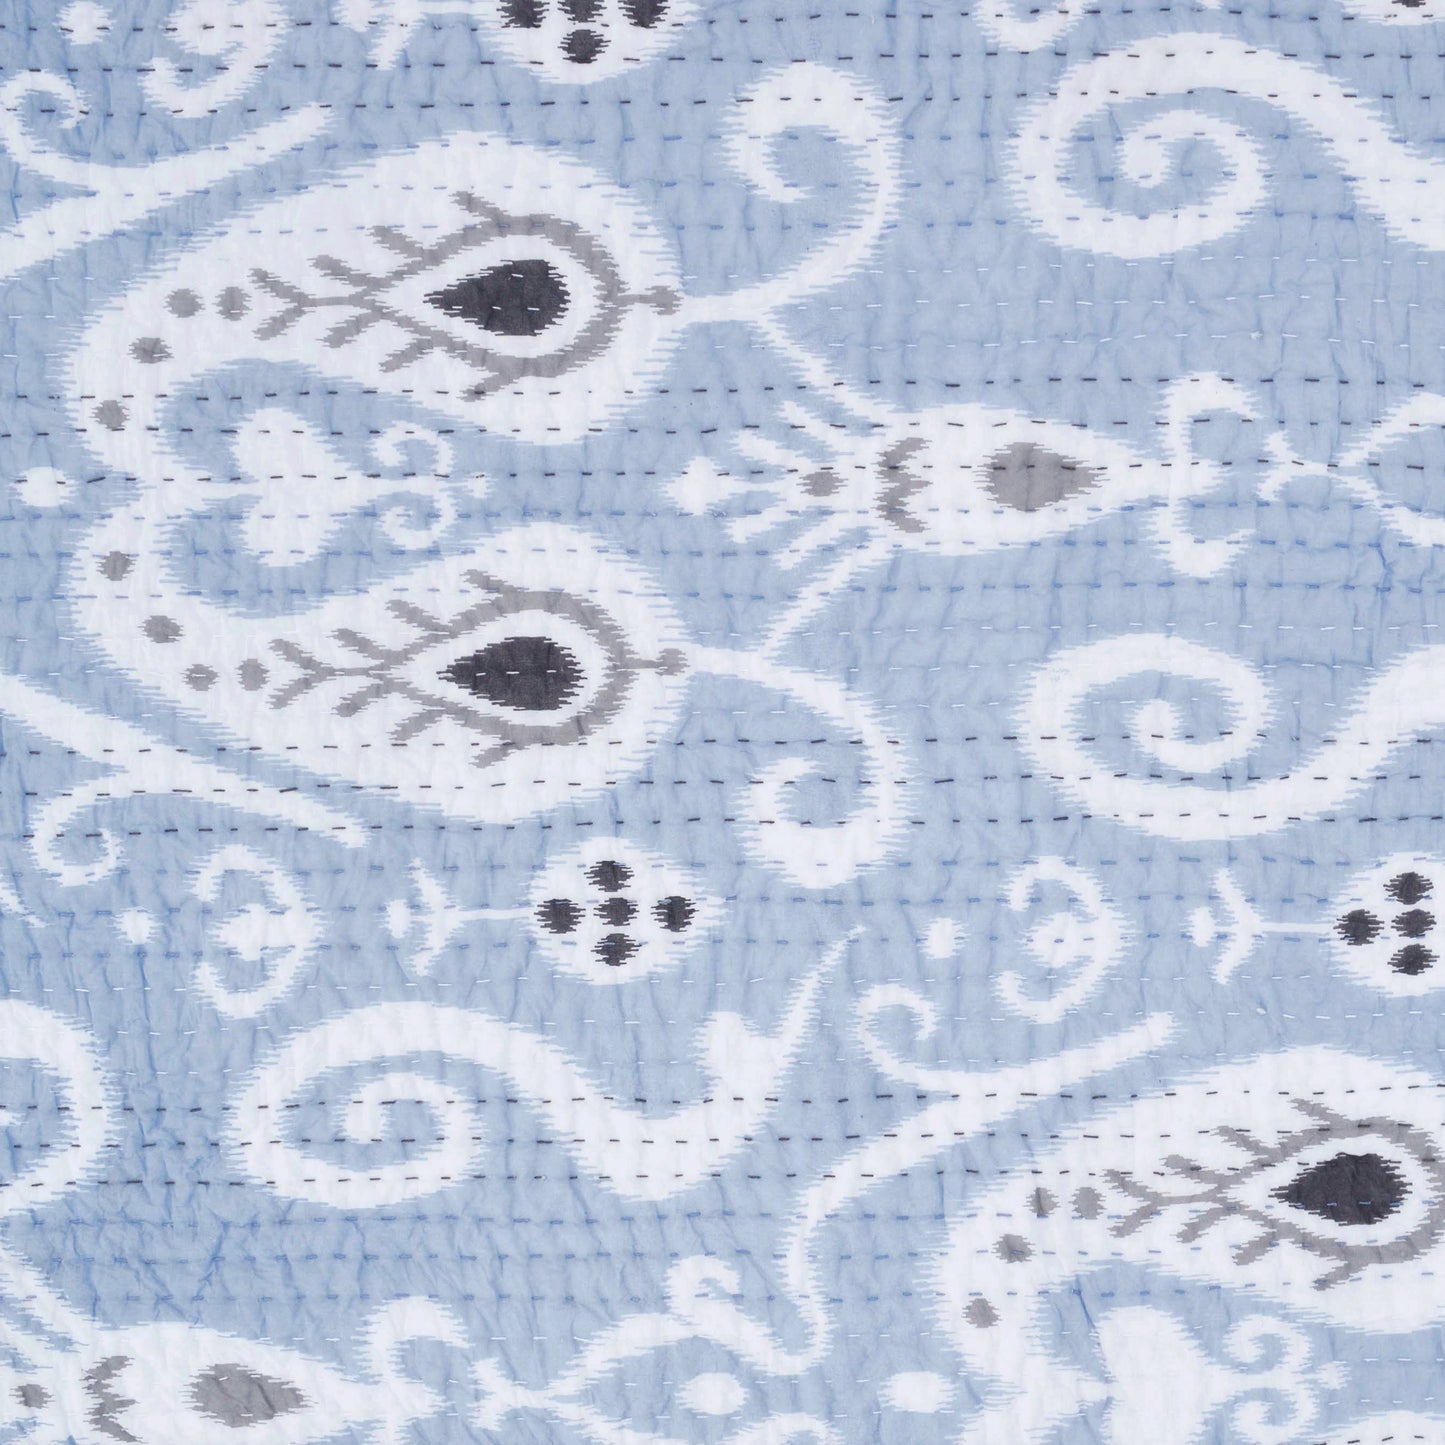 BLUE IKAT print Kantha quilt - stripe pattern quilting - Quilt set / Quilt / Pillow case available